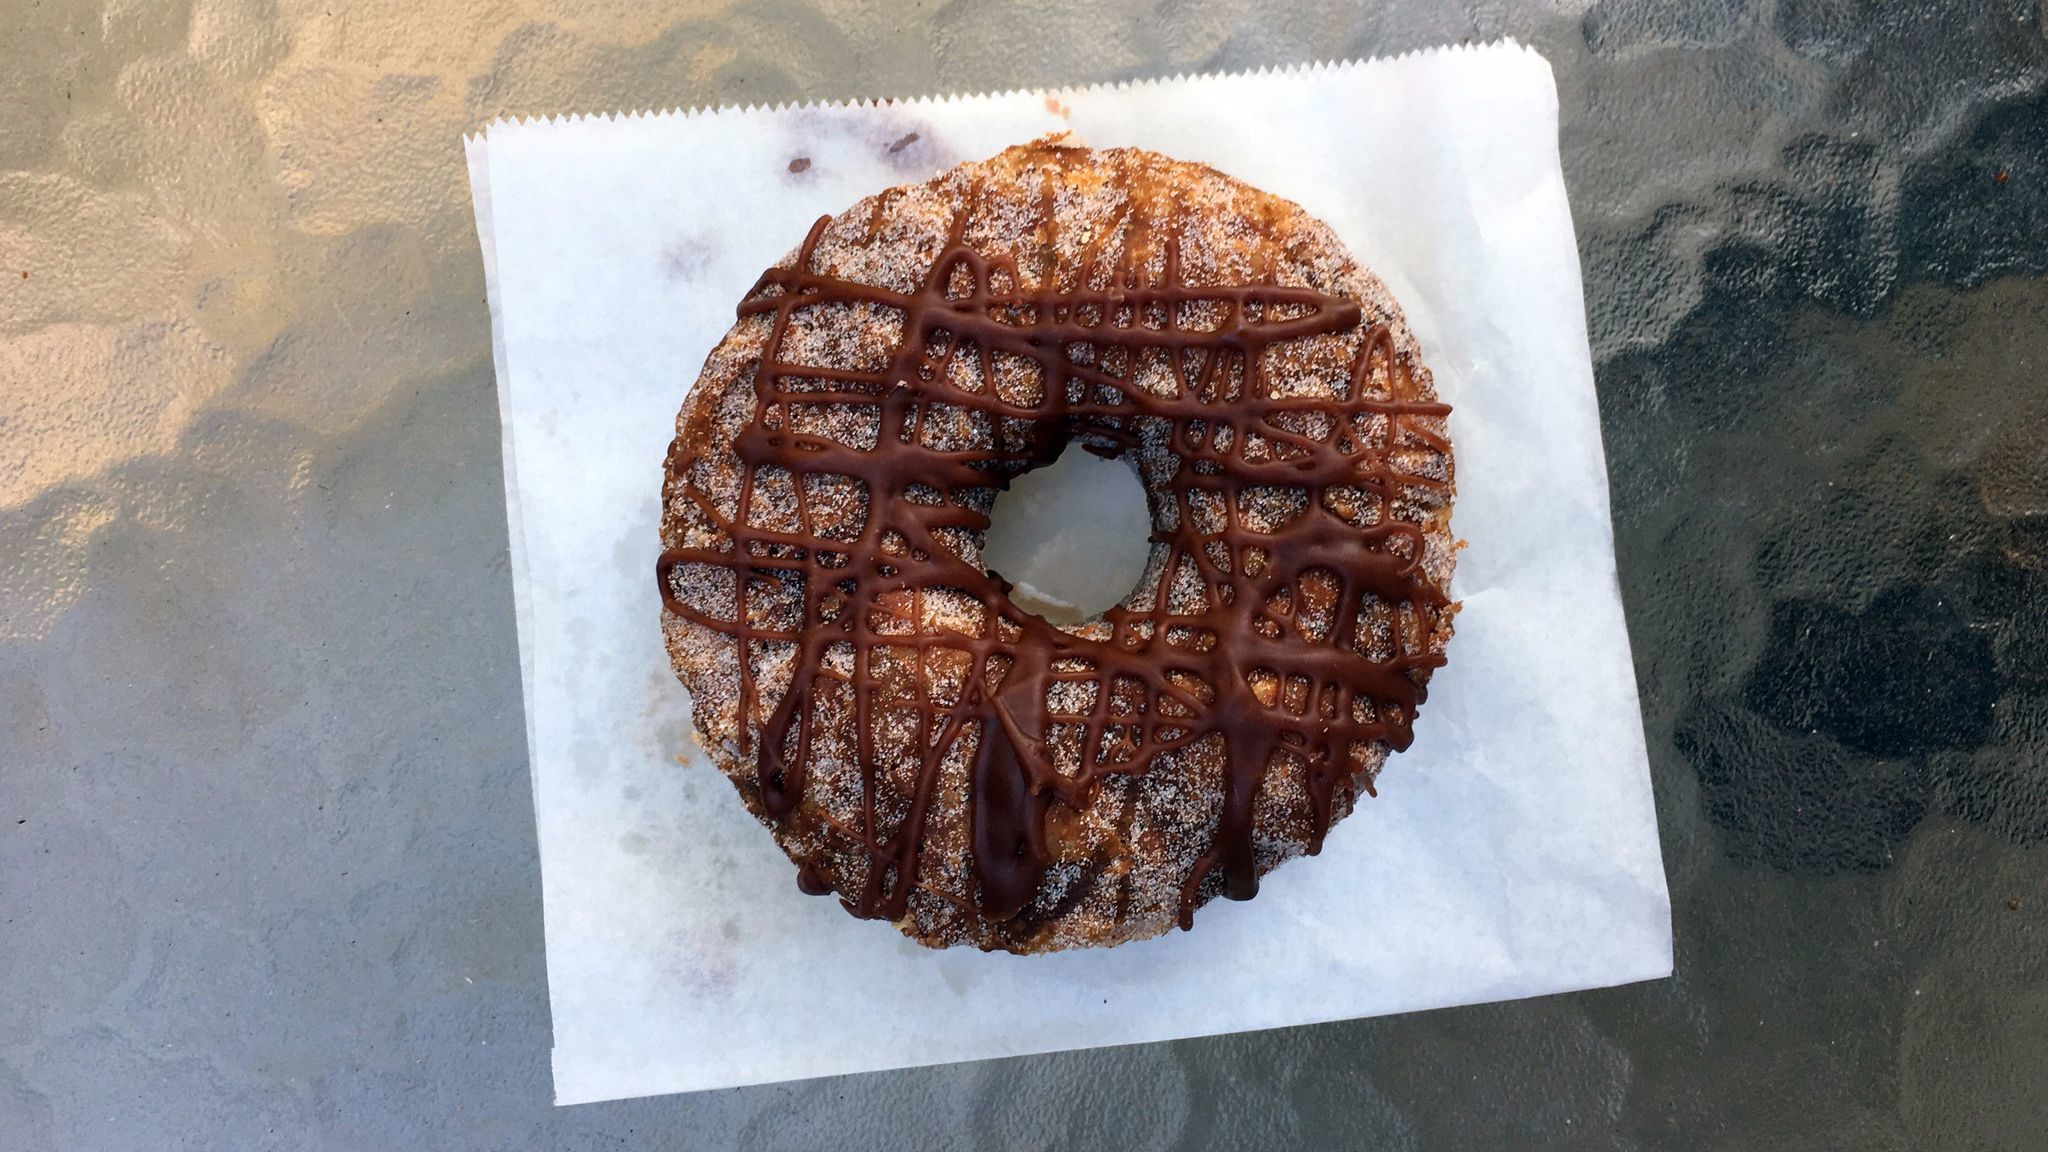 Croissant style doughnut from Kettle Glazed.